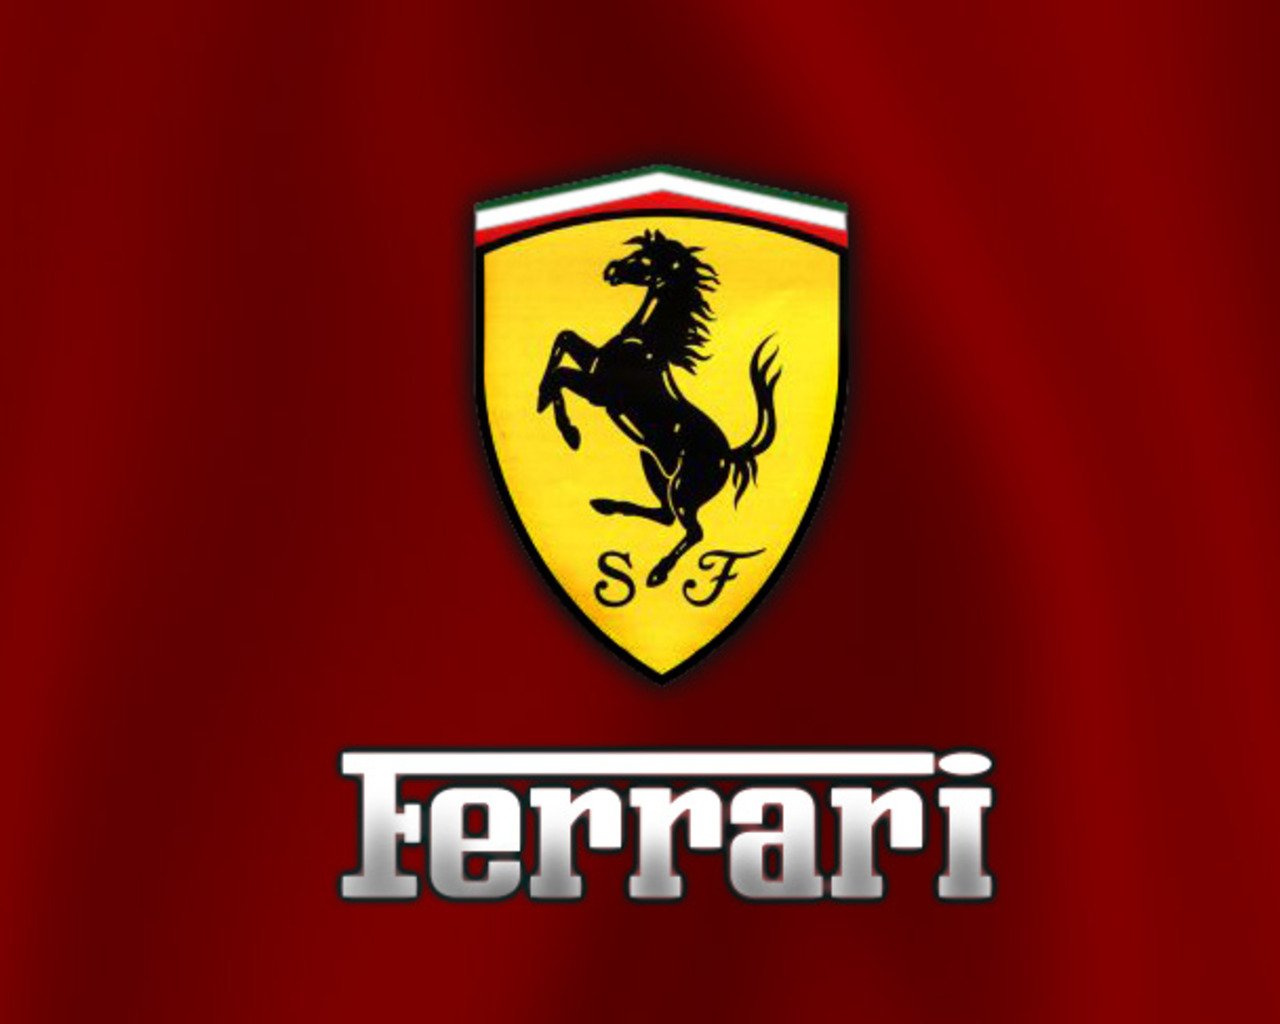 Ferrari Brand Logo Wallpapers 1750 Brand Logo   bwallescom